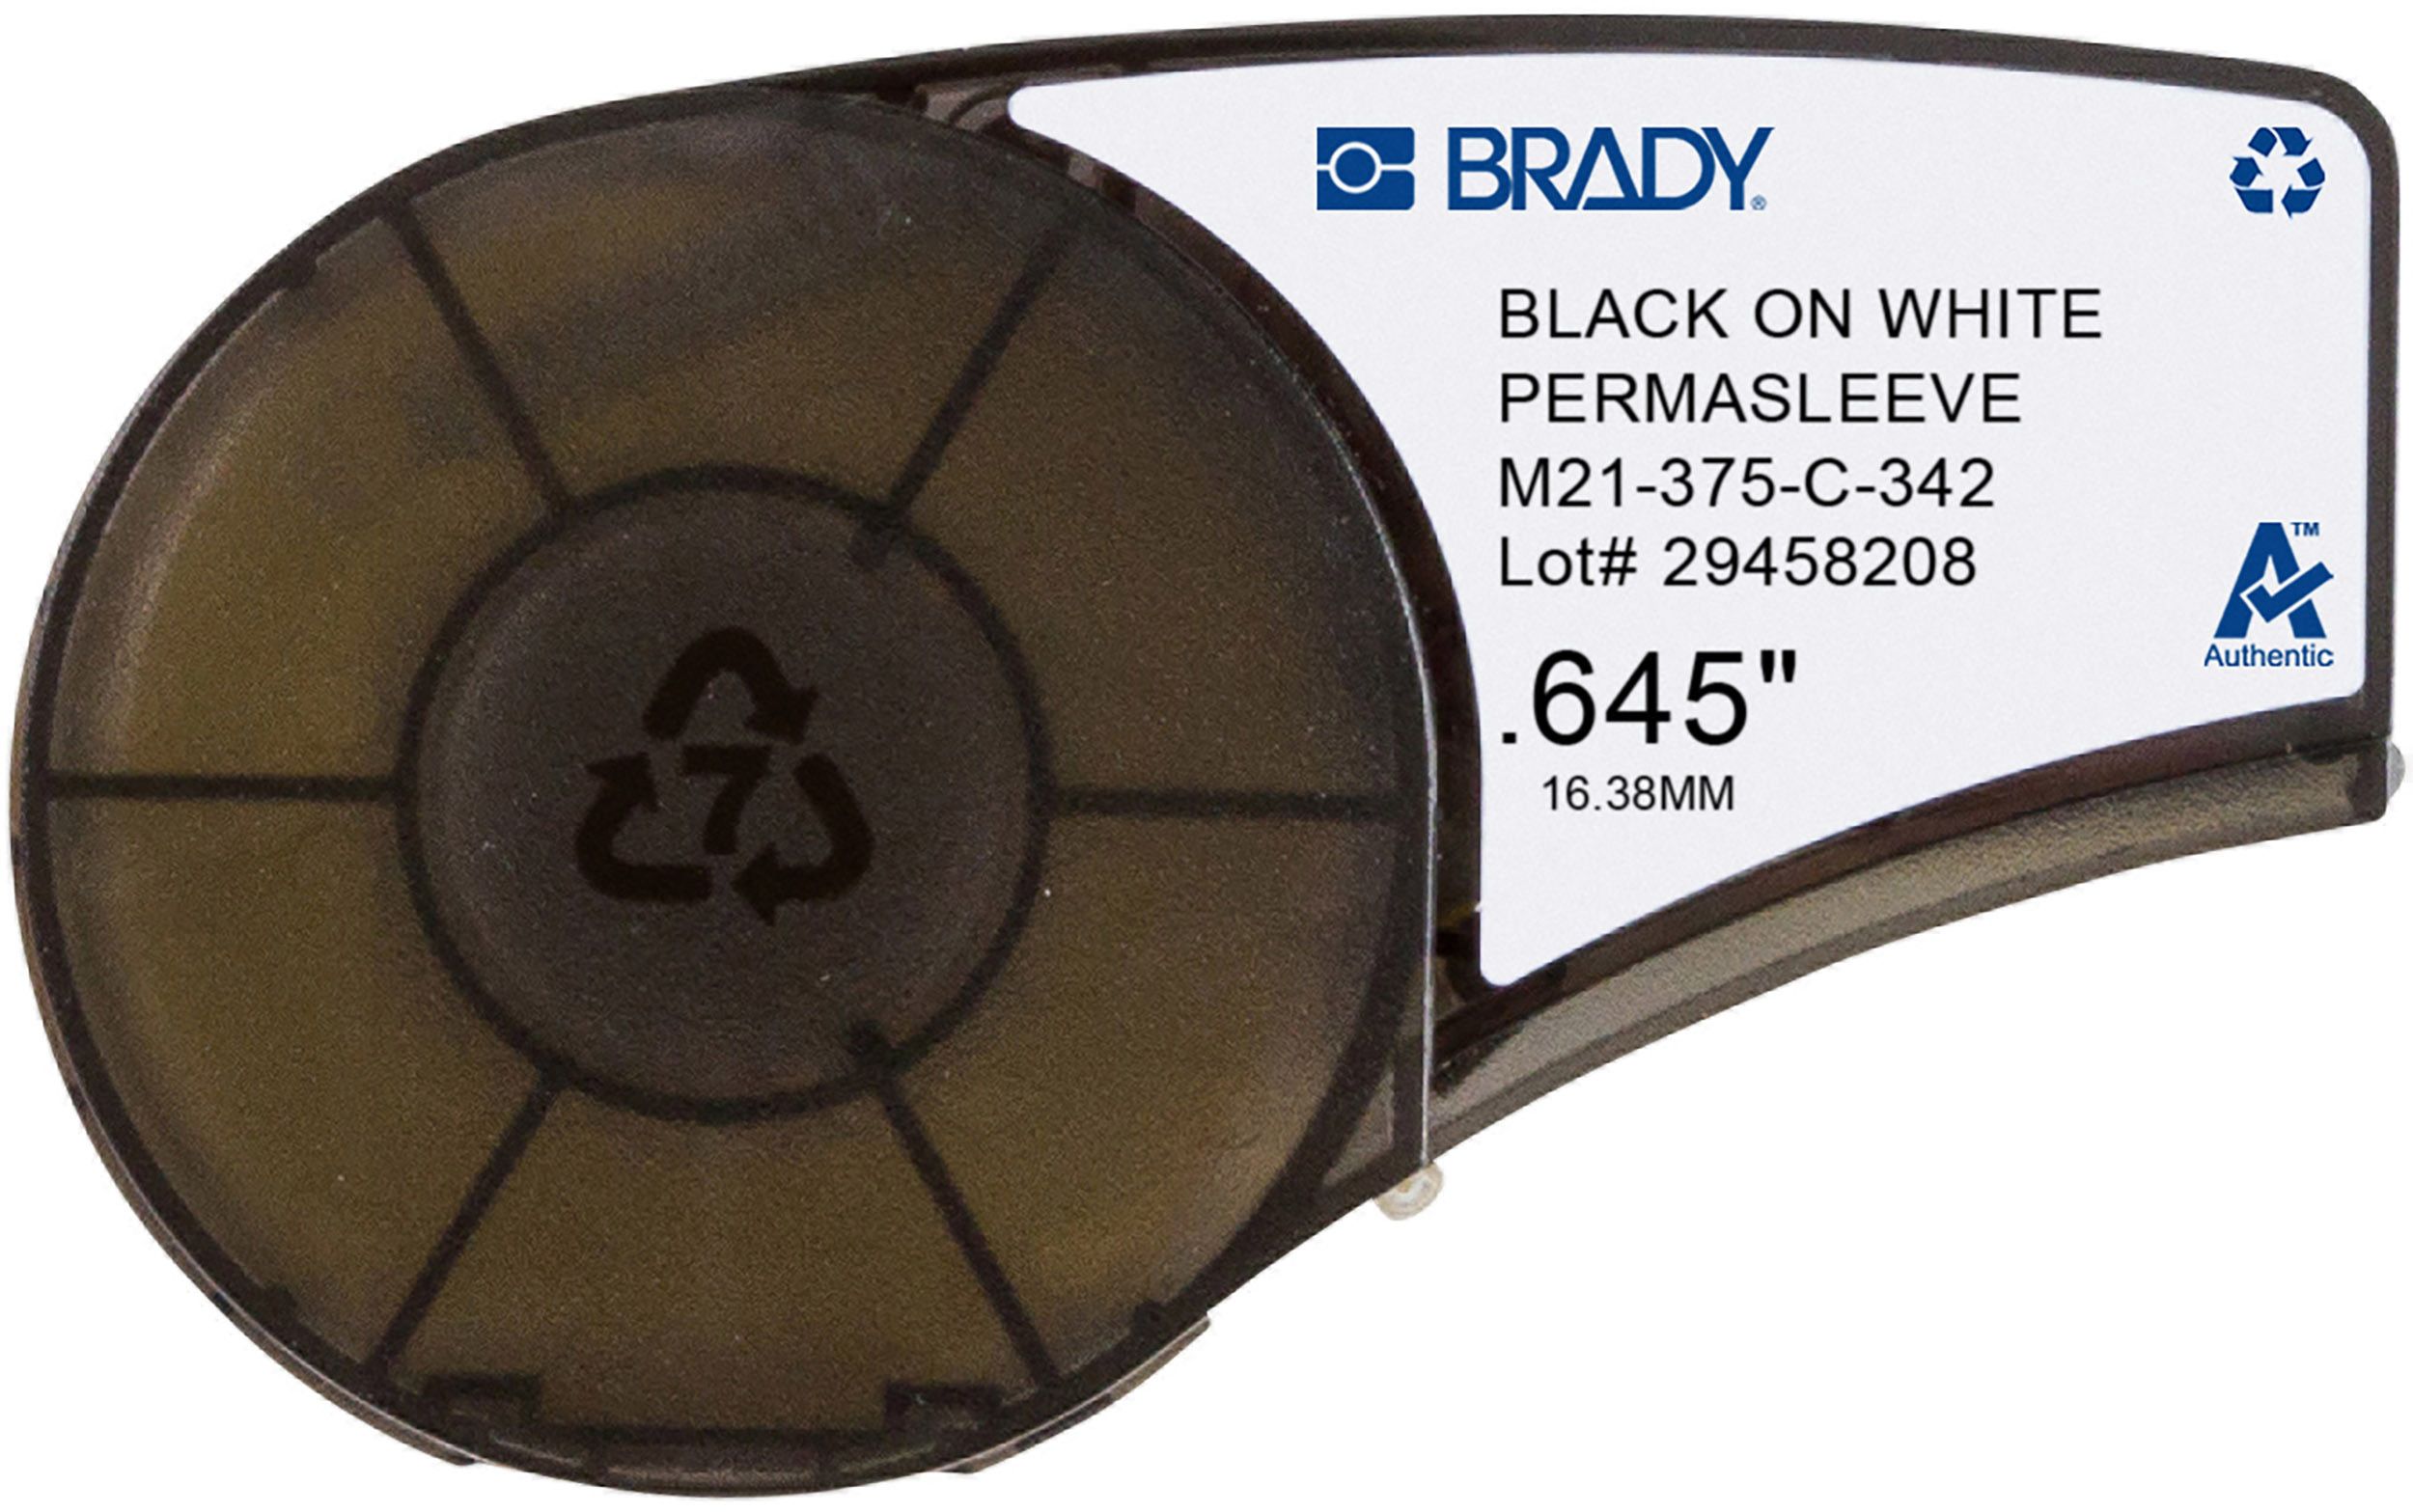 Brady B-342 PermaSleeve Black on White Label Printer Tape, 2.13 m Length, 16.38 mm Width, 16.4mm Label Length